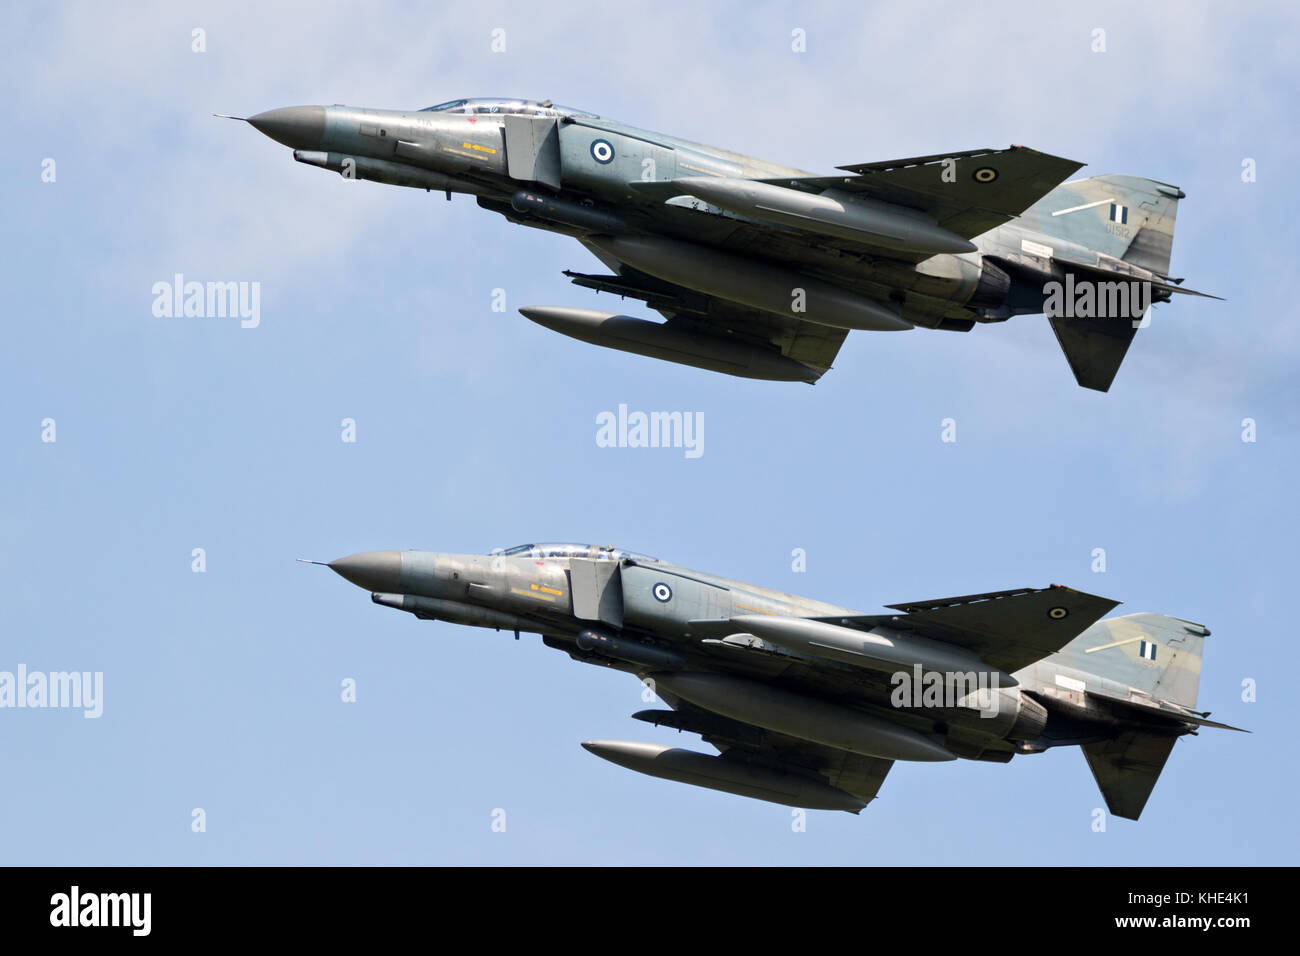 FLORENNES, BELGIUM - JUN 15, 2017: Two Greek Air Force F-4 Phantom fighter jet planes in formation flight. Stock Photo